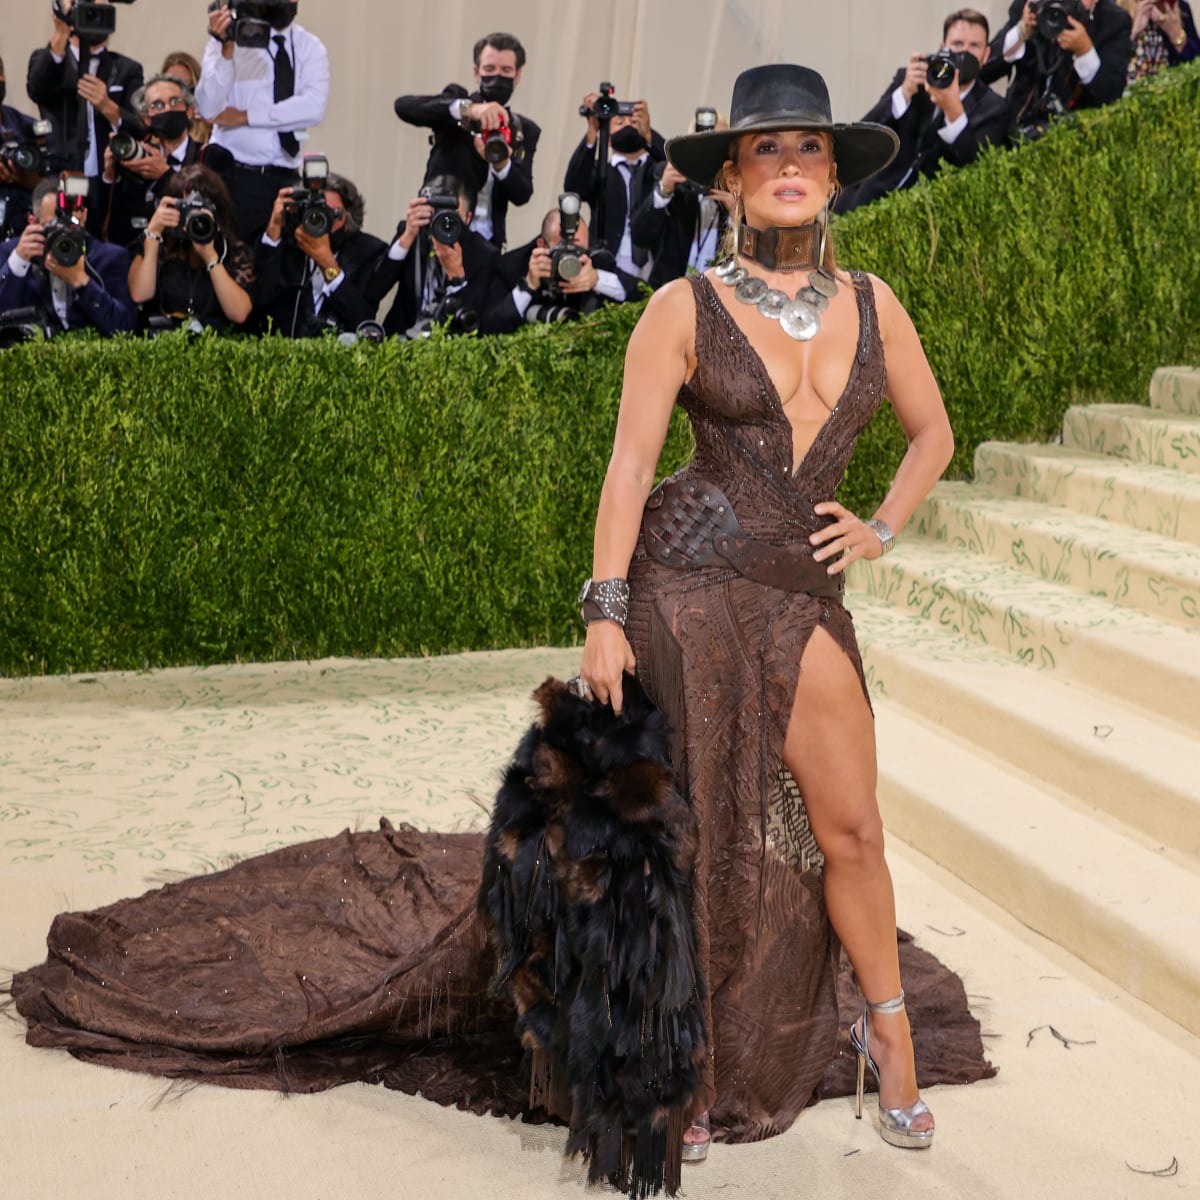 Ralph Lauren Designed Three Custom Wedding Dresses for Jennifer Lopez - Fashionista